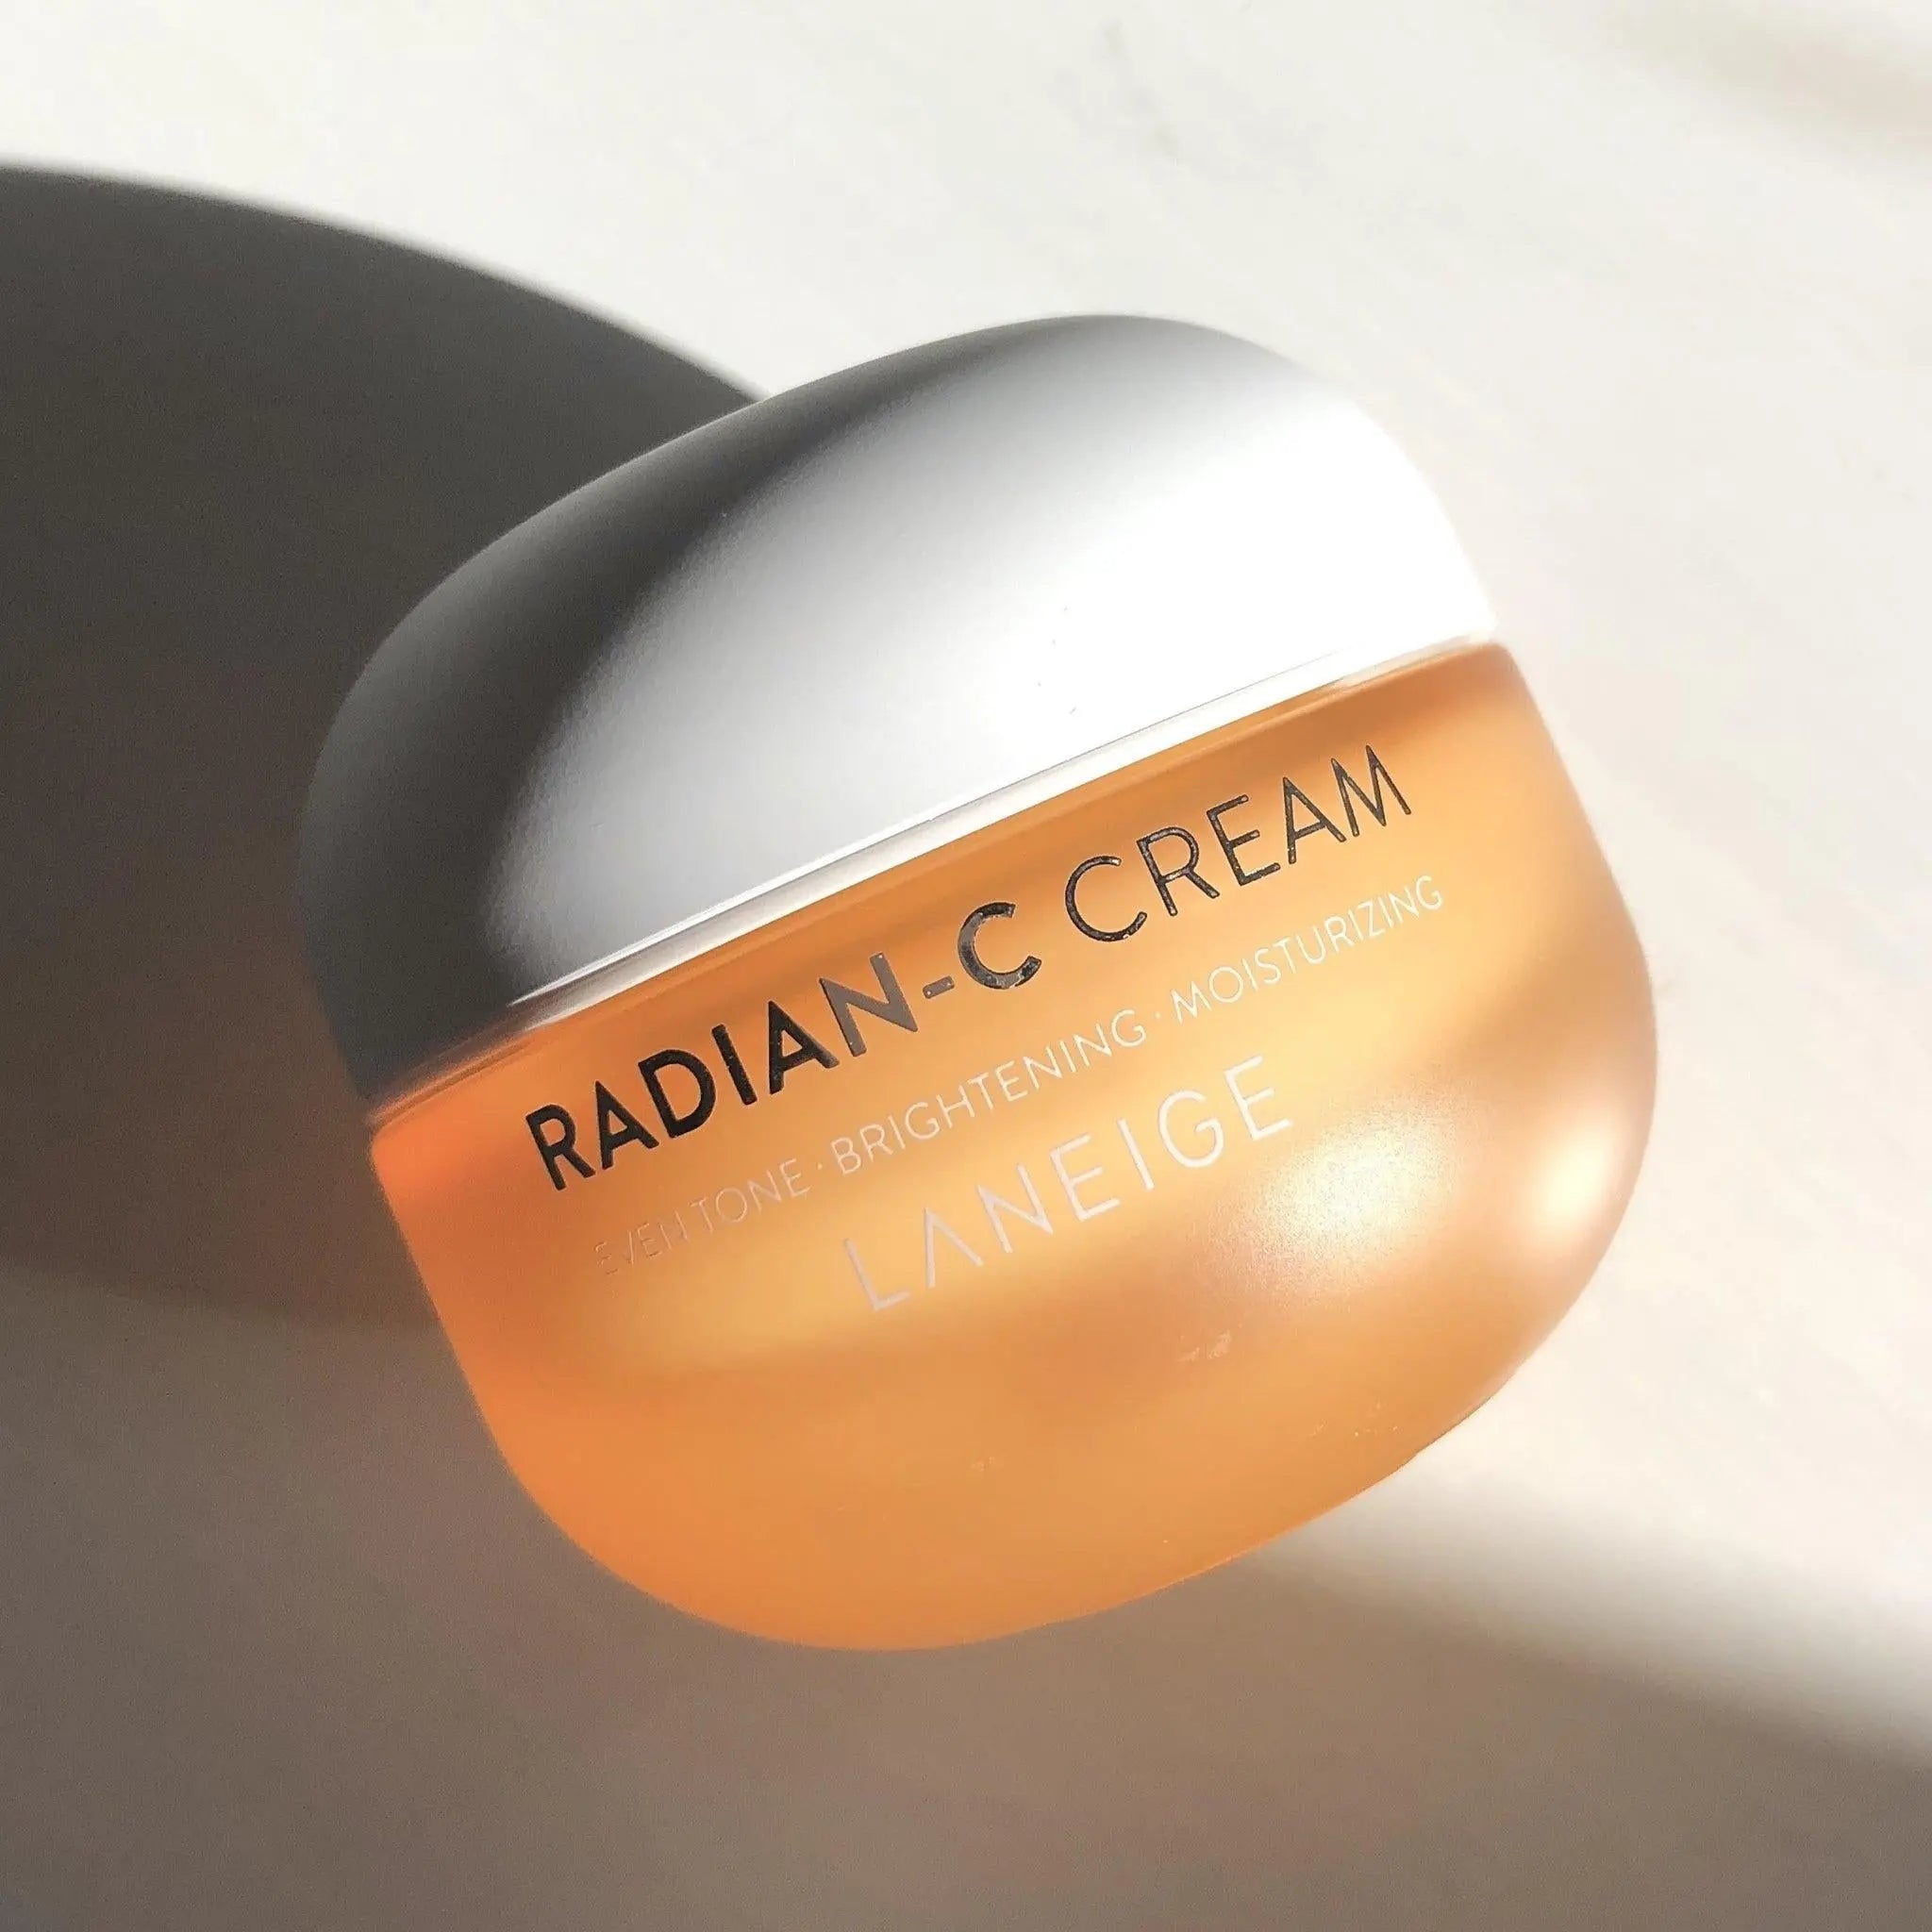 Laneige Radian-C Cream - Brightening and Hydrating Care